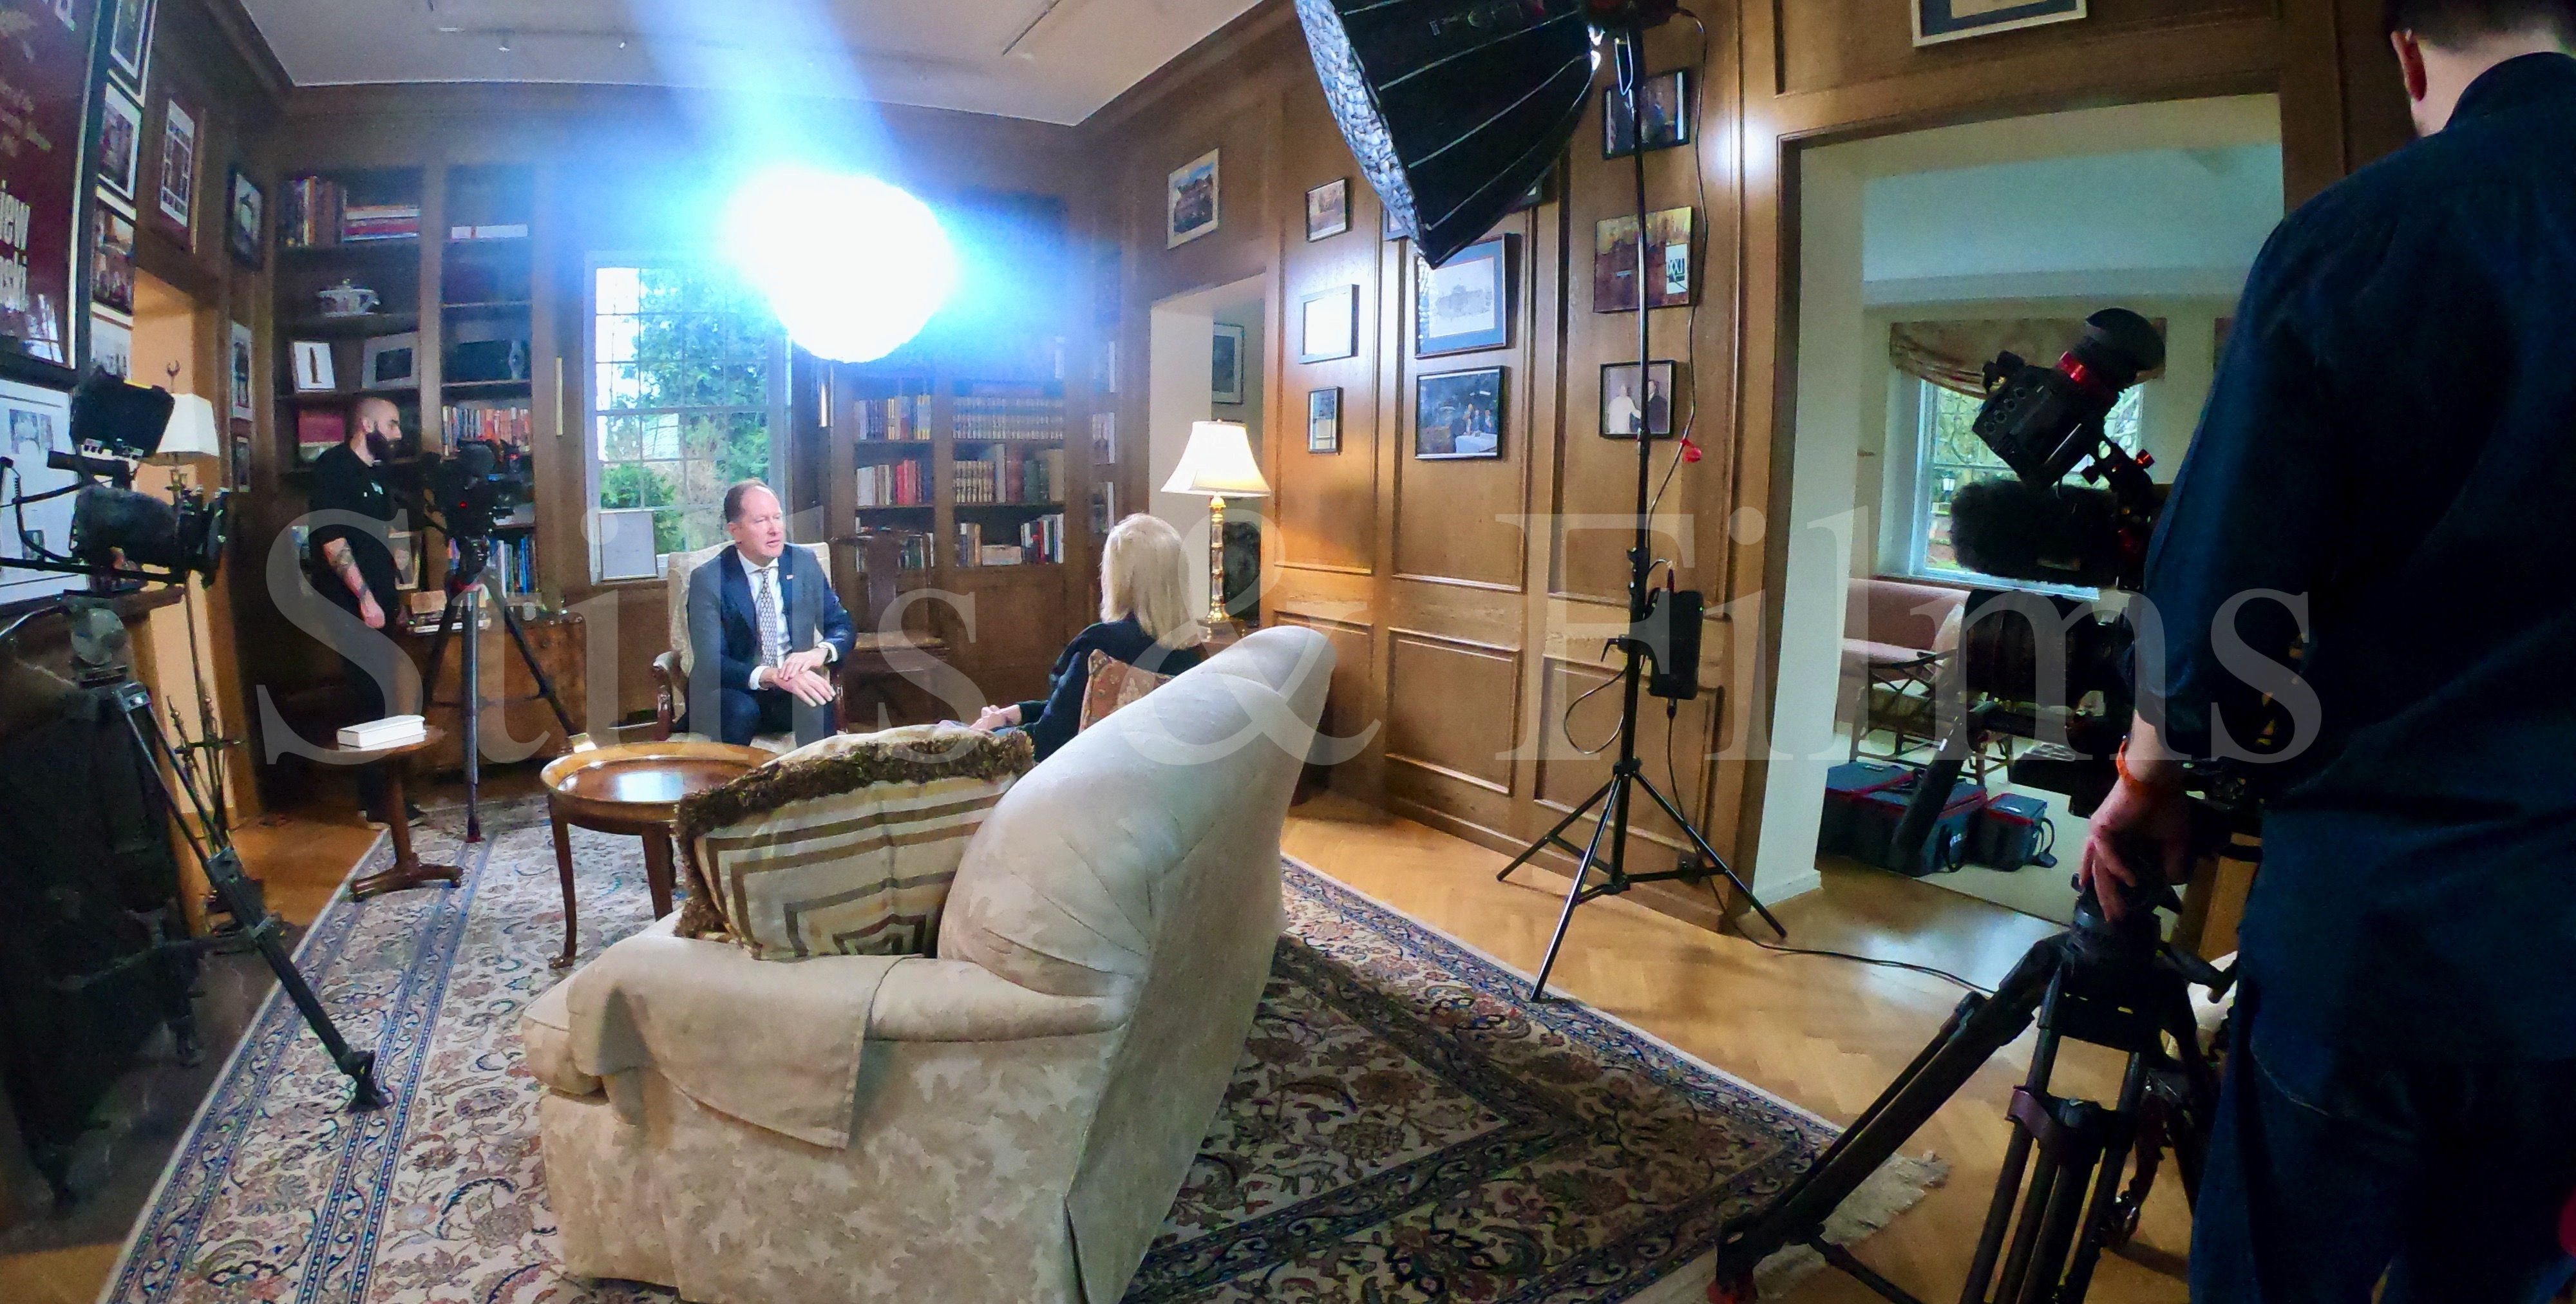 Filming with the US ambassador Mark Brzezinski in Warsaw, Poland